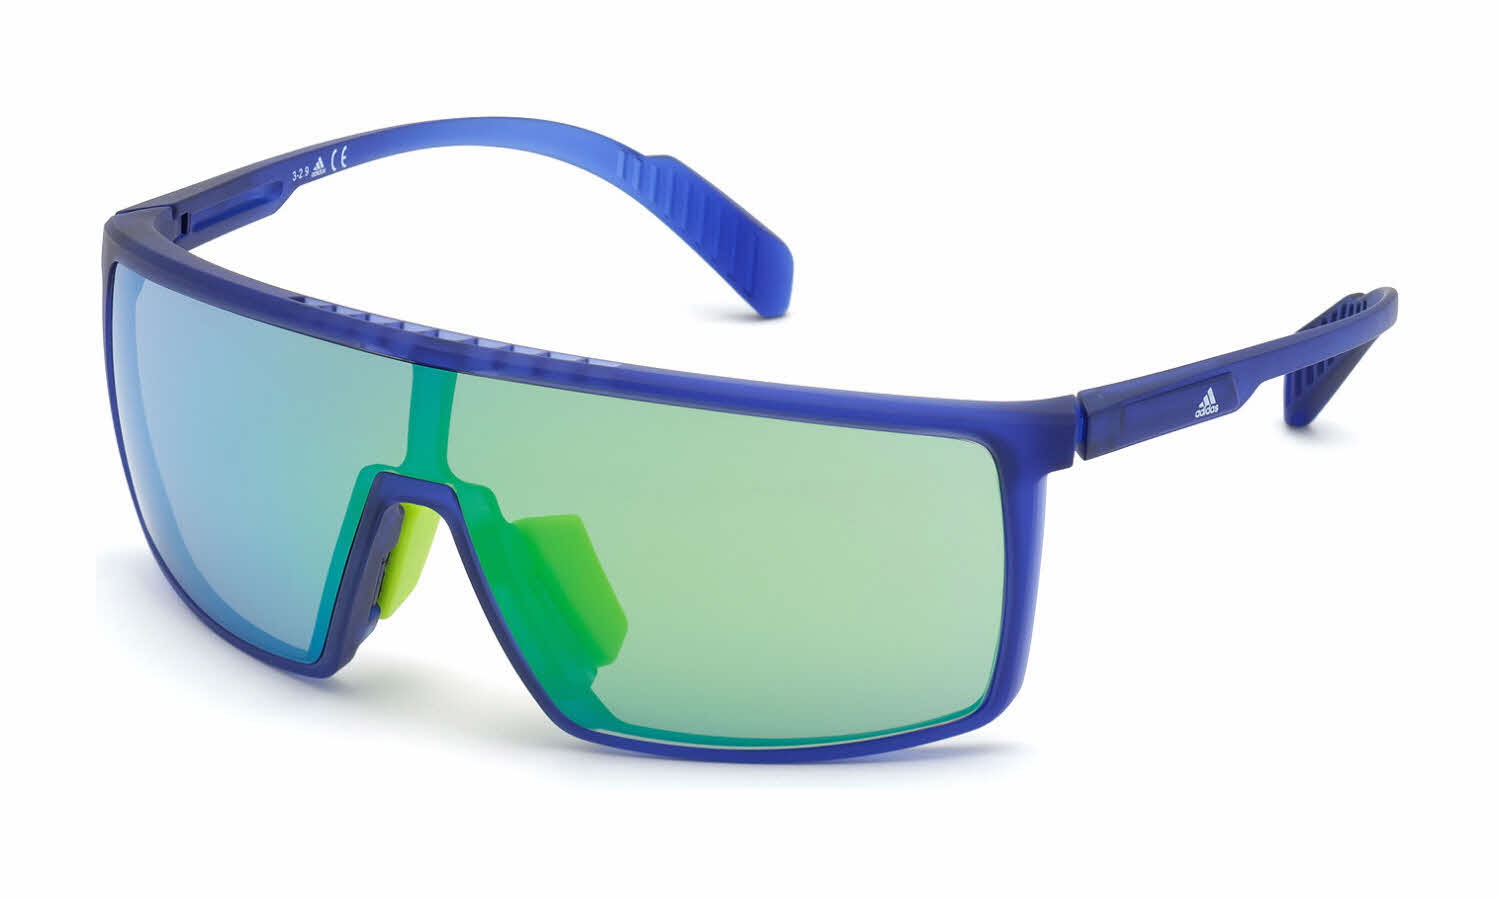 Adidas SP0004 Sunglasses